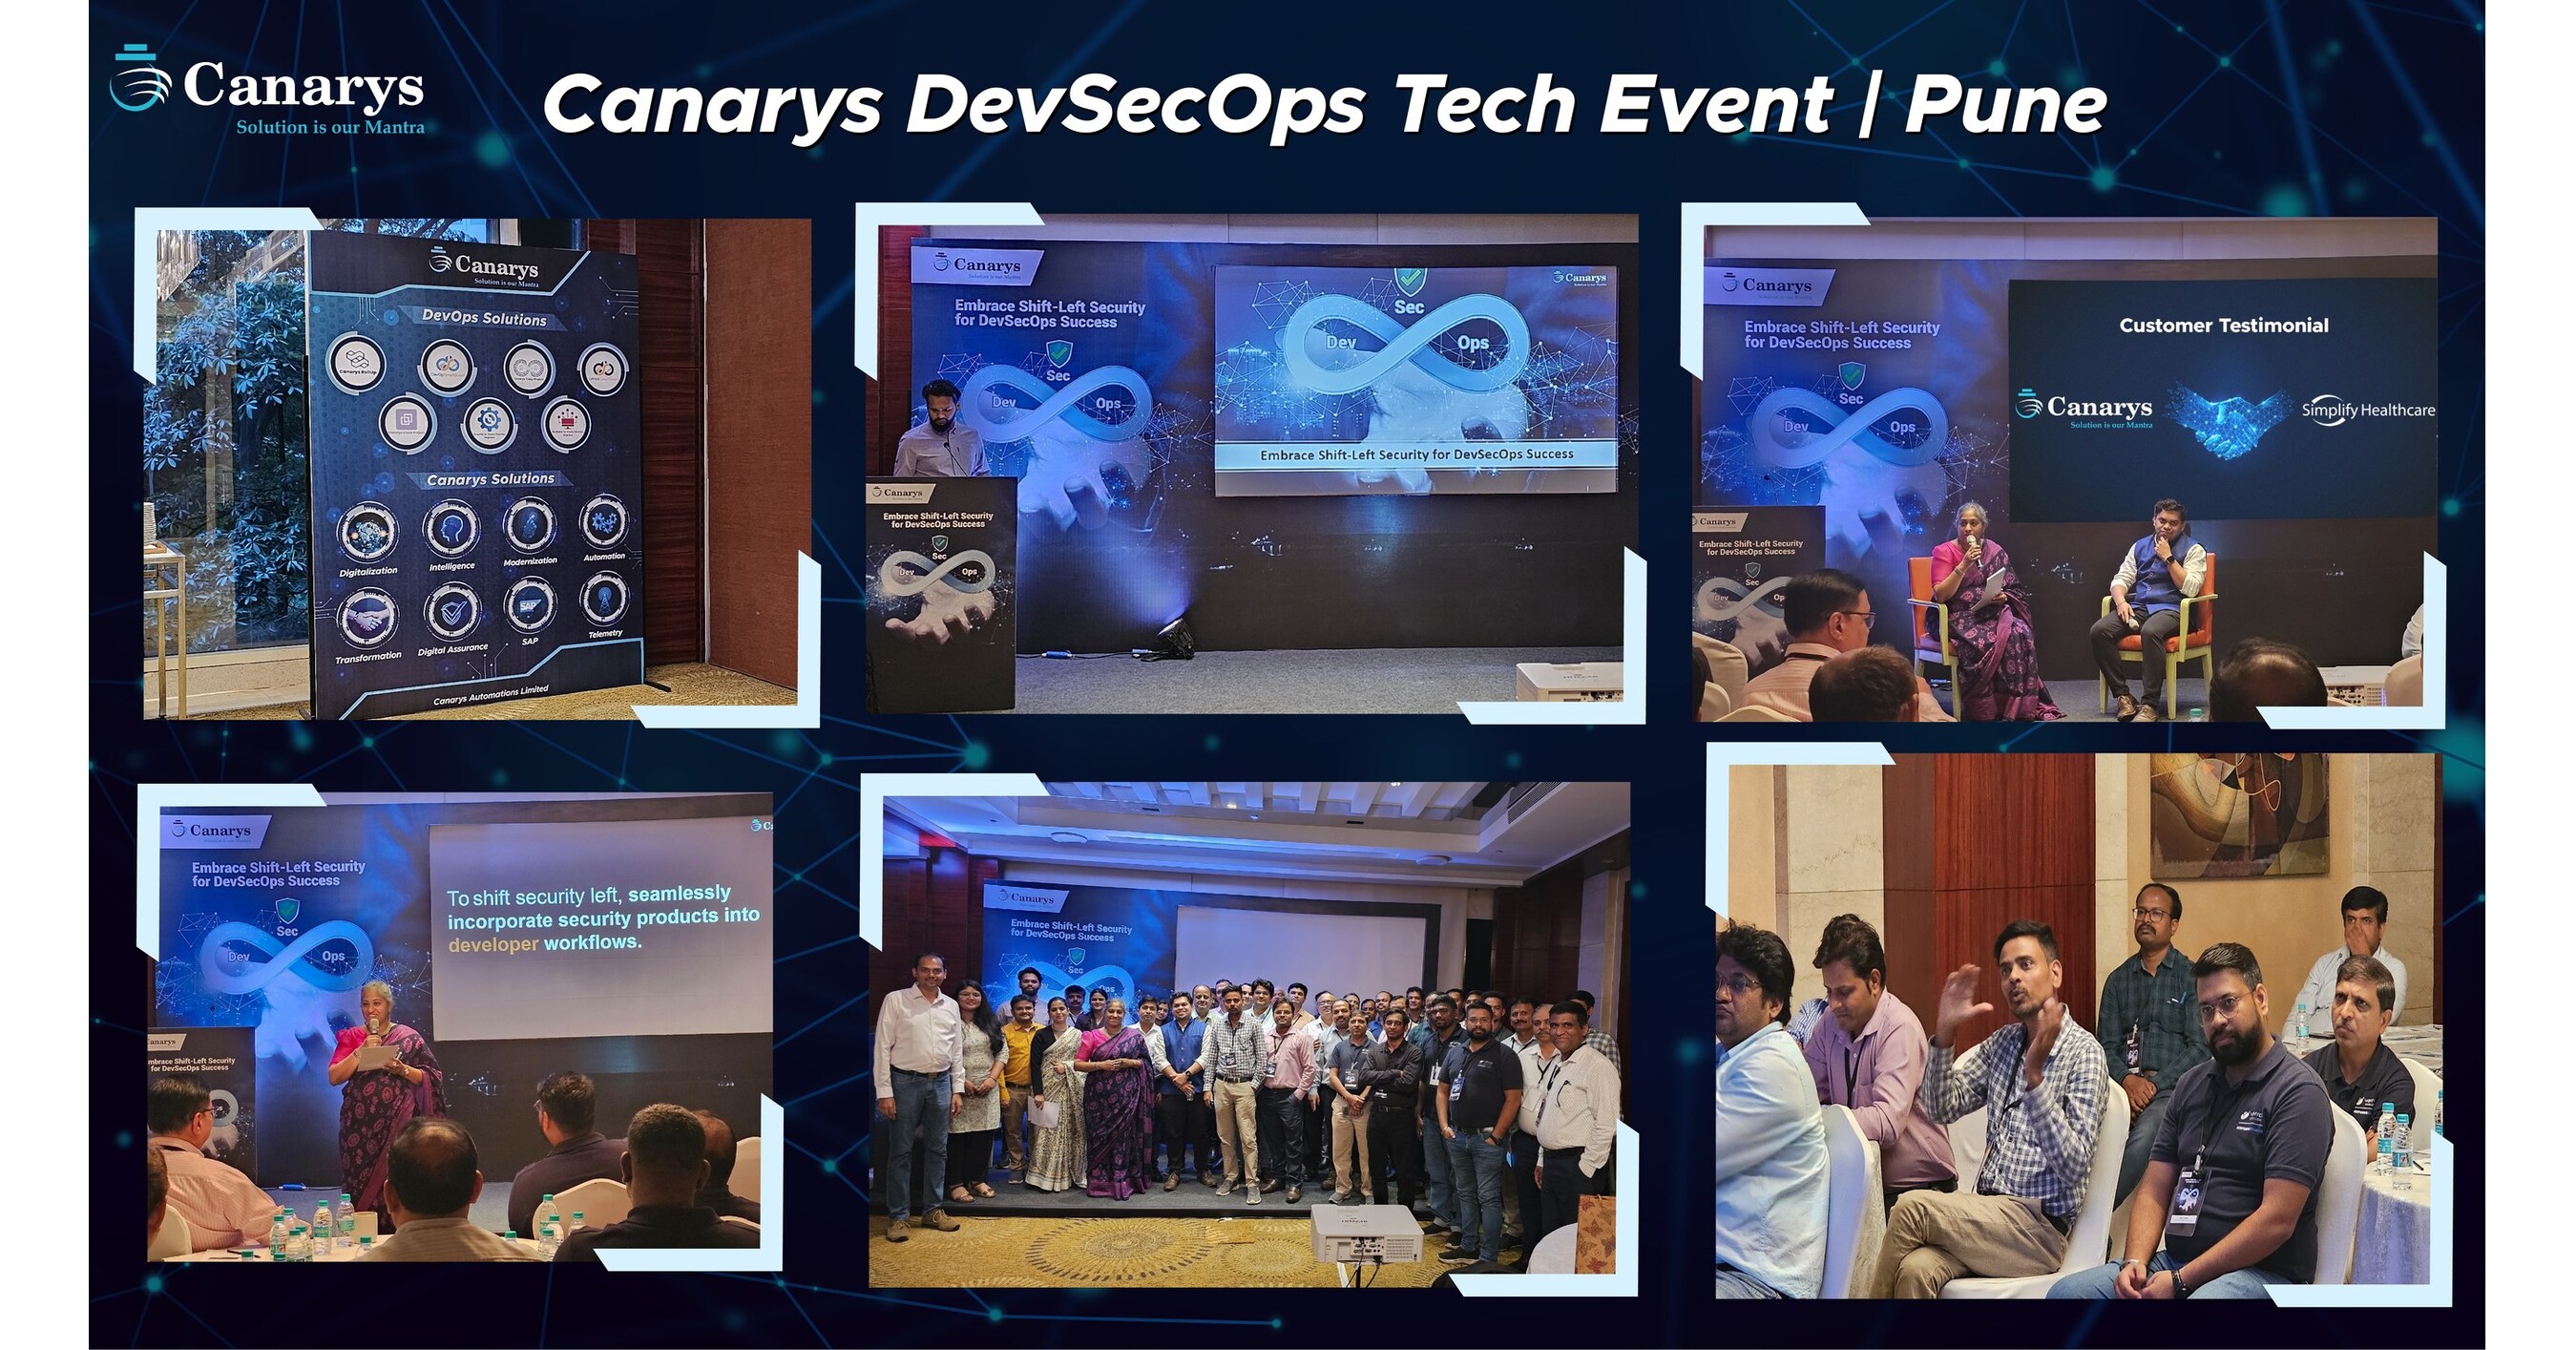 Canarys Automations Ltd Achieves Remarkable Success with 'Embrace Shift-Left Security for DevSecOps Success' Tech Event